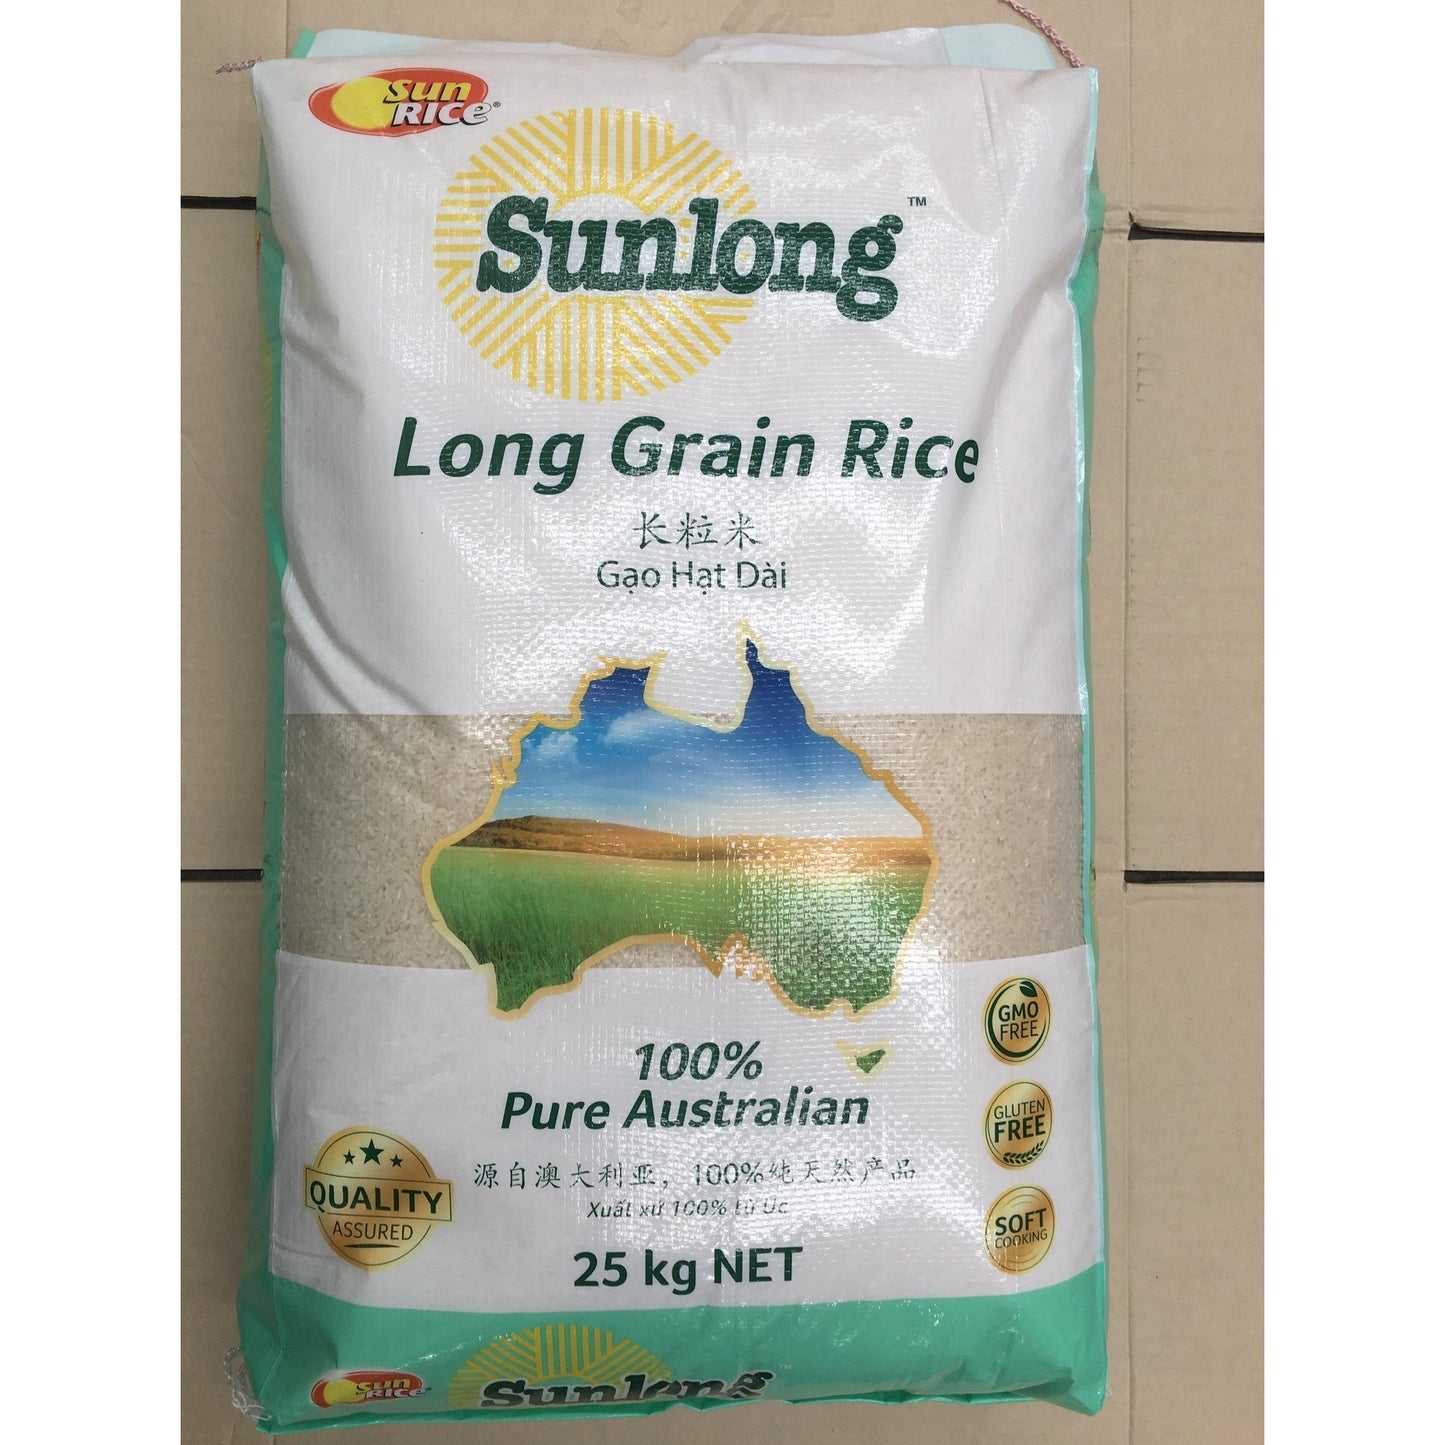 R004 Sun Rice- Long Grain Rice 25kg - 1 bag - New Eastland Pty Ltd - Asian food wholesalers